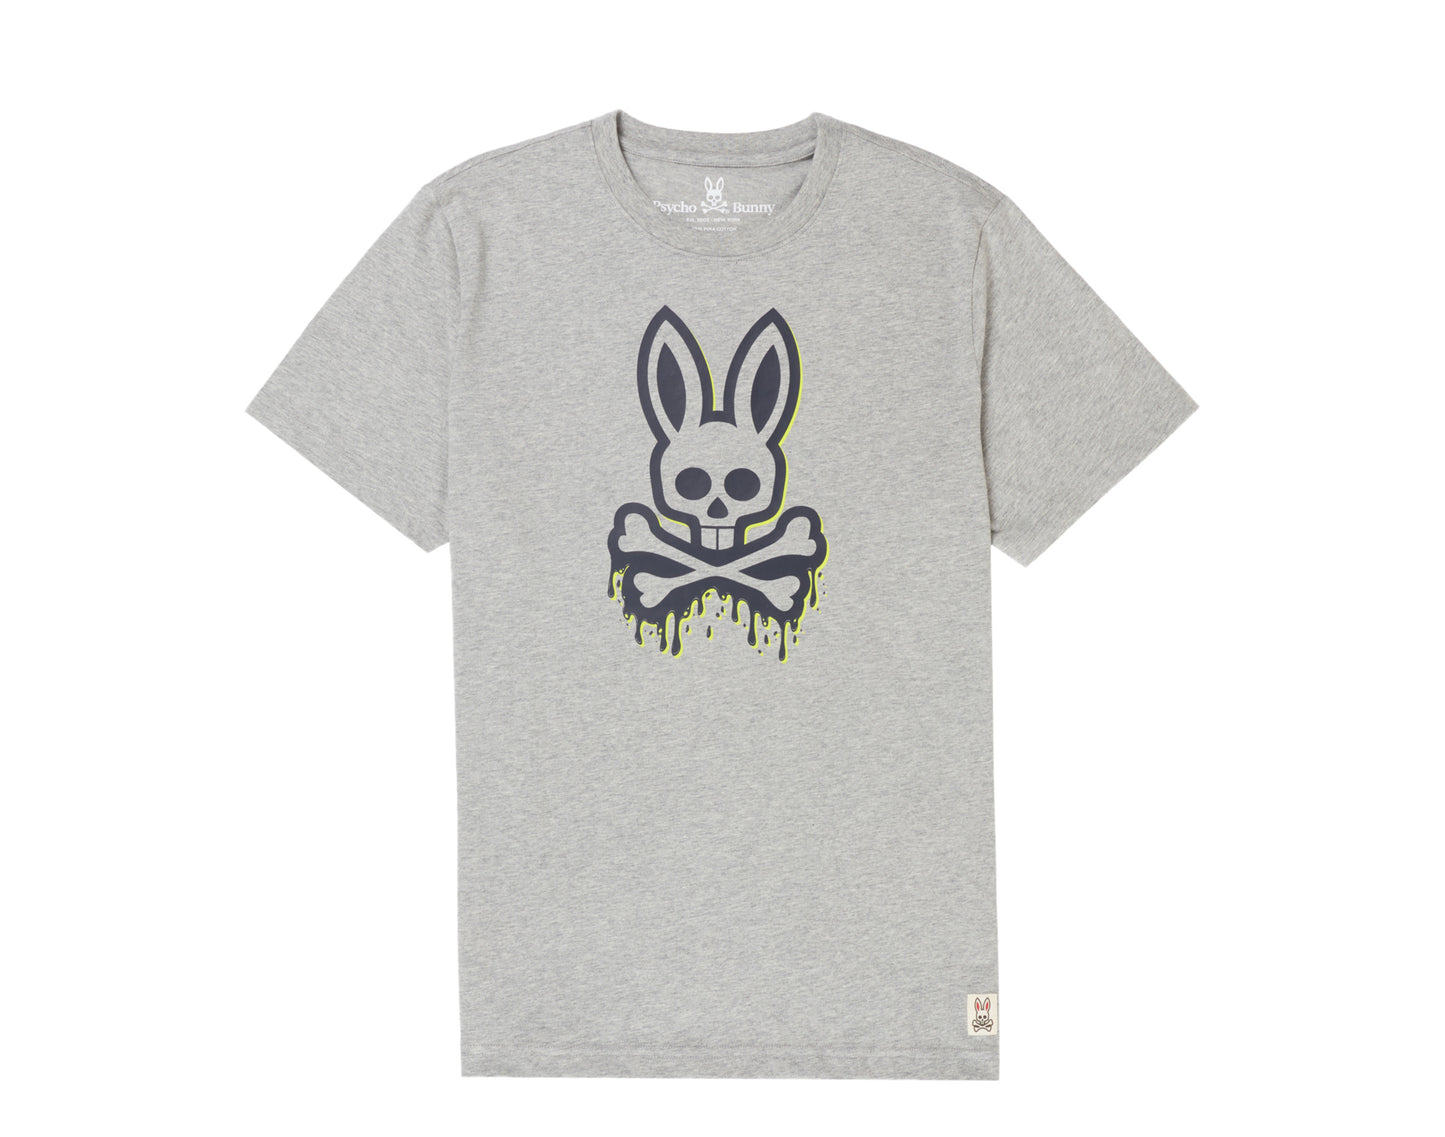 Psycho Bunny Portland Graphic Heather Grey Men's Tee Shirt B6U163L1PC-HGY